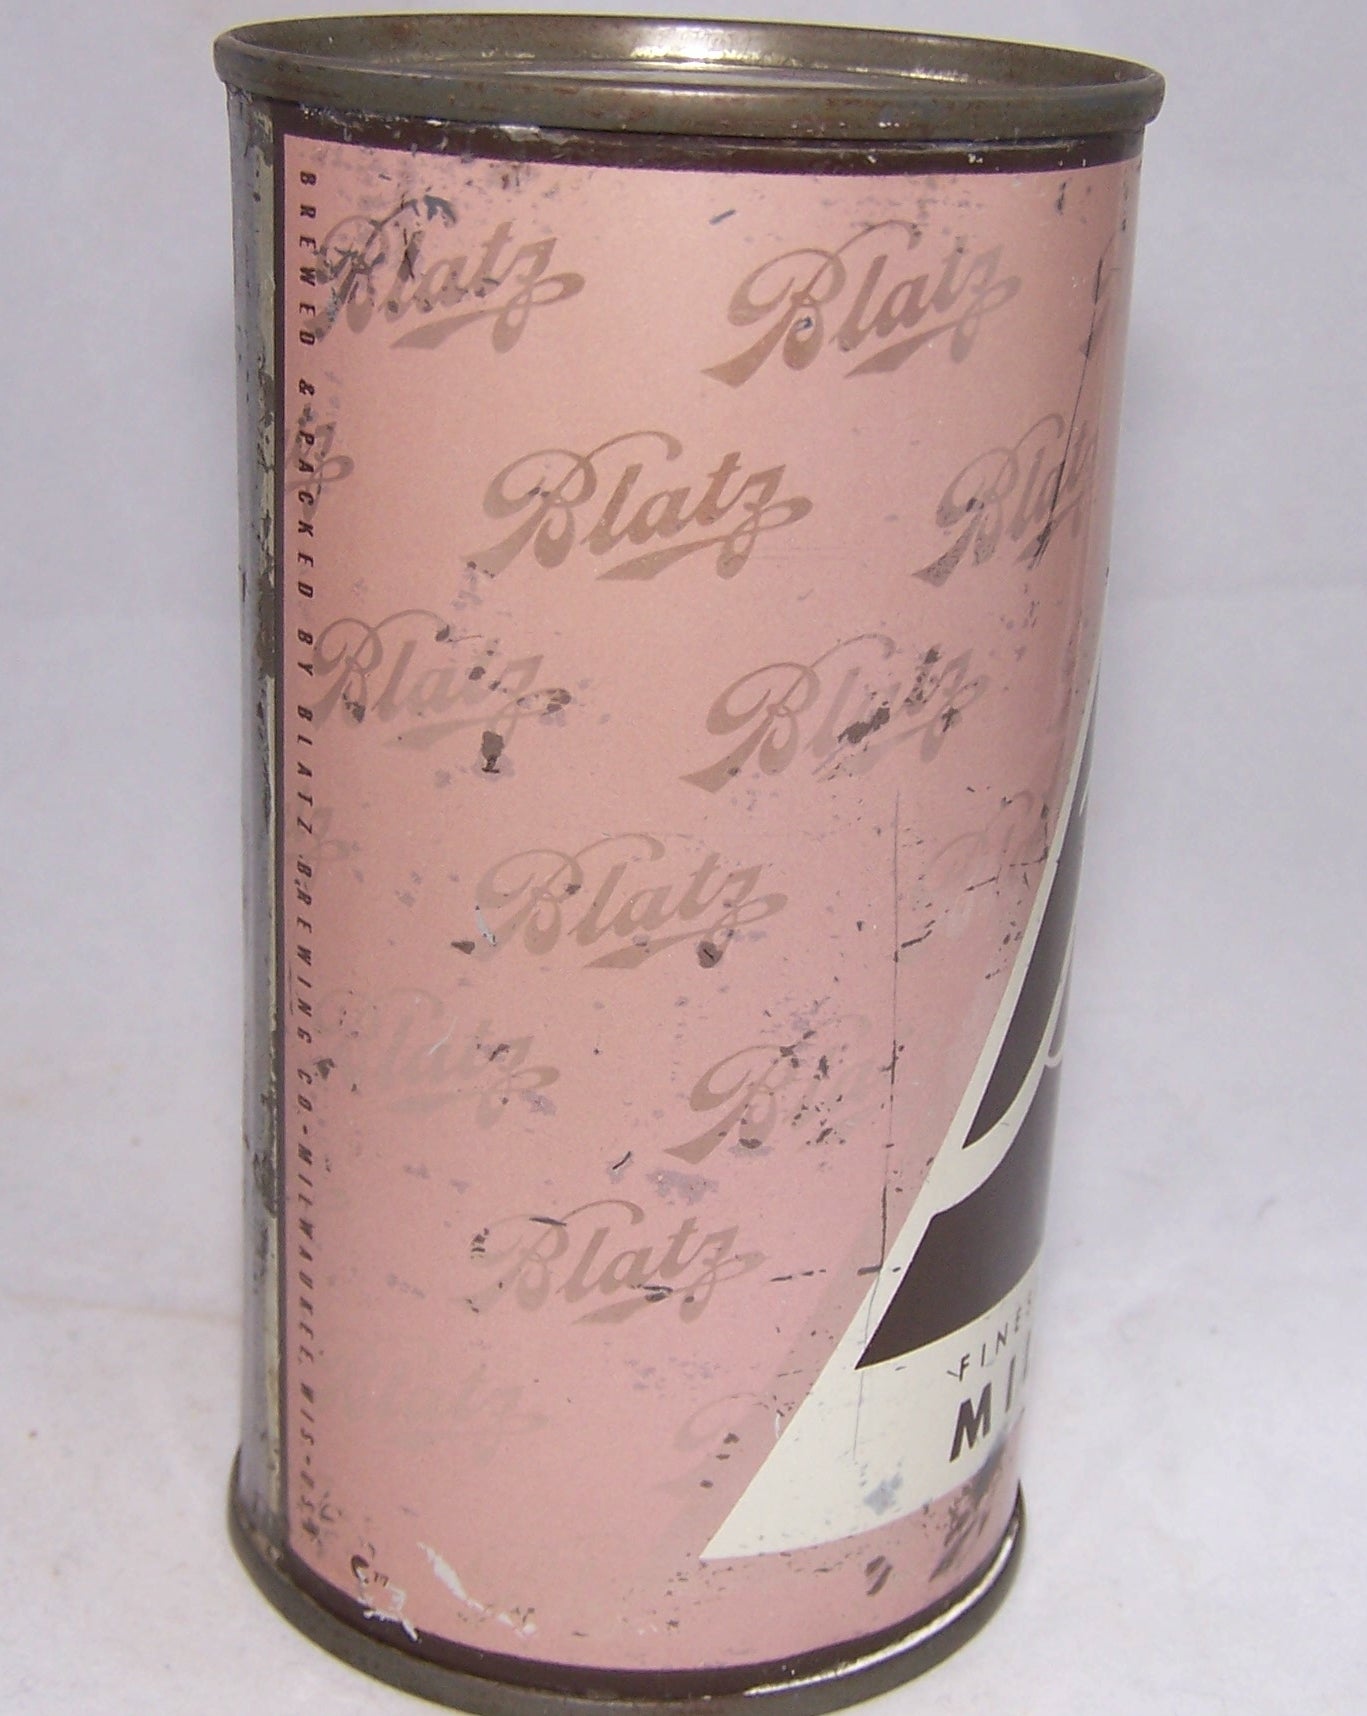 Blatz set can (Pink) USBC 39-15, Grade  1- Sold on 09/10/17